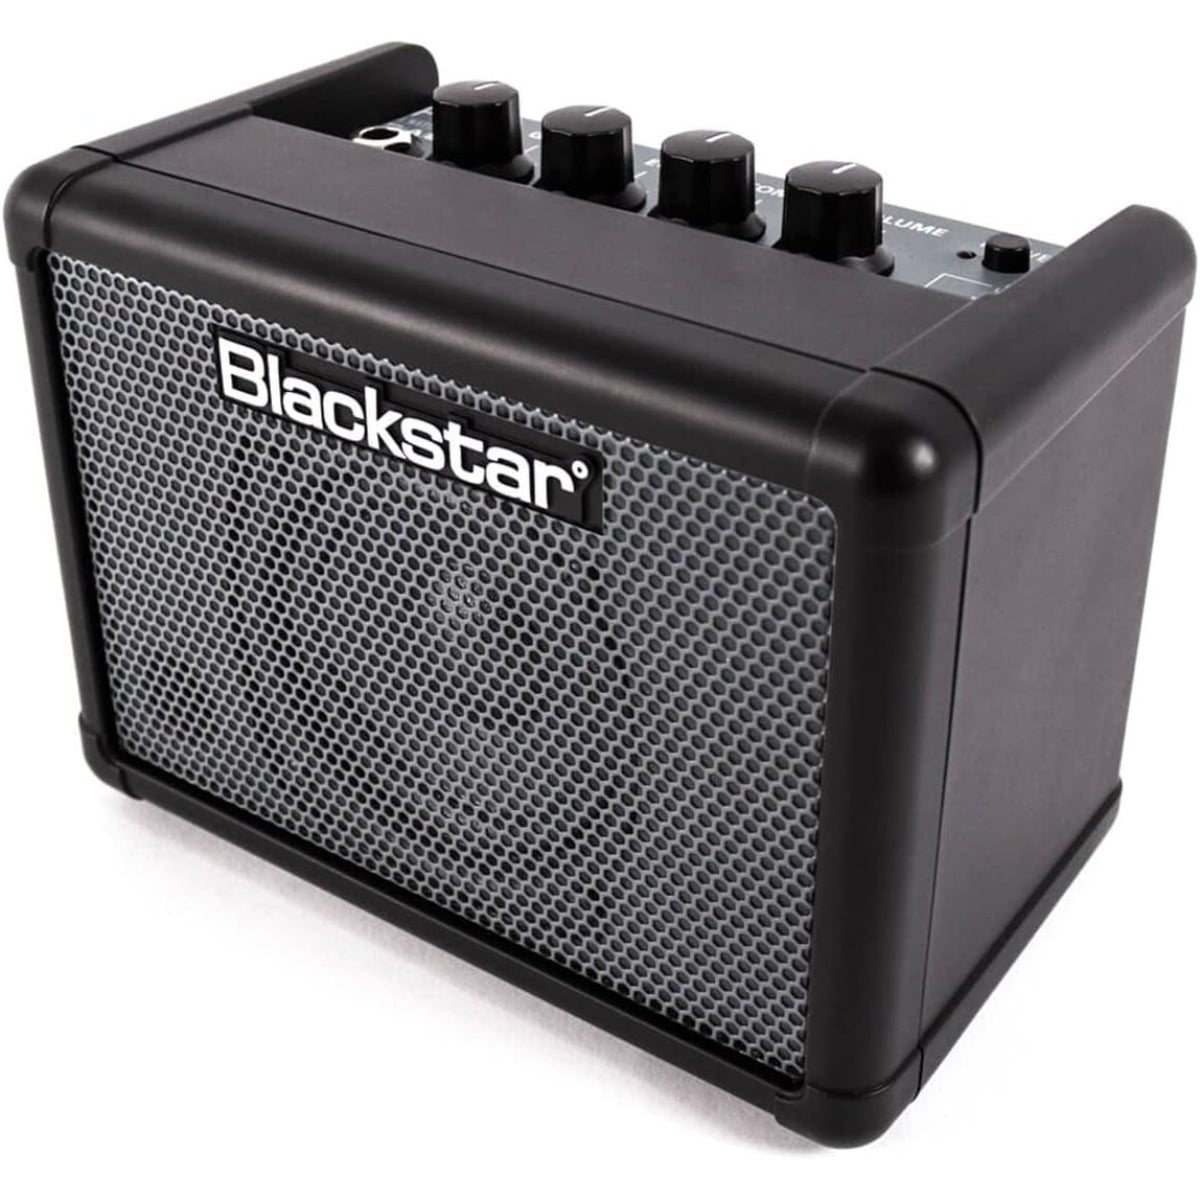 Blackstar Fly Bass Mini Amplifier